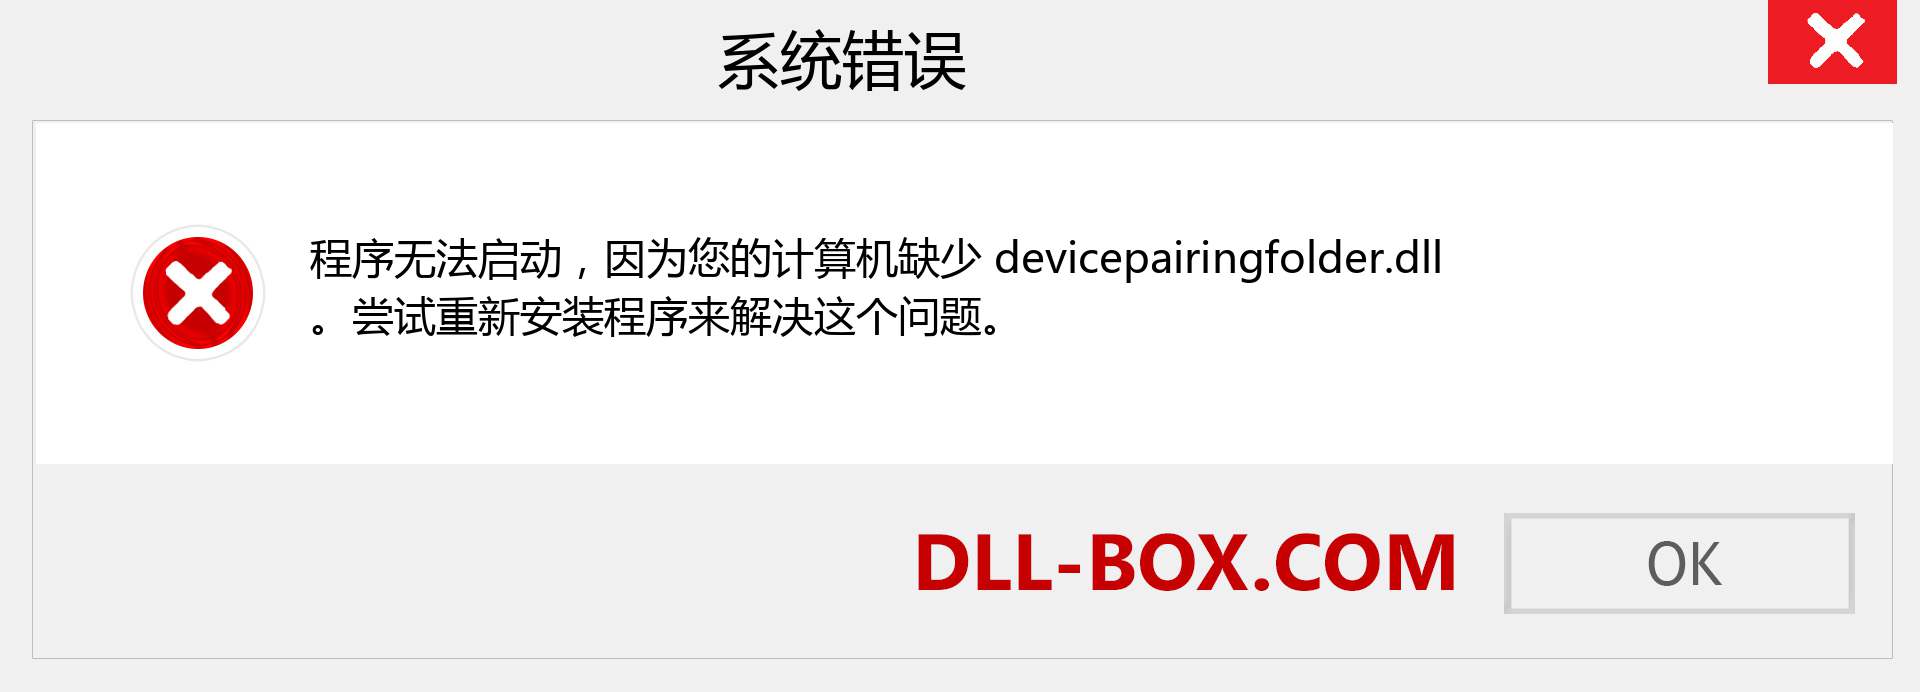 devicepairingfolder.dll 文件丢失？。 适用于 Windows 7、8、10 的下载 - 修复 Windows、照片、图像上的 devicepairingfolder dll 丢失错误